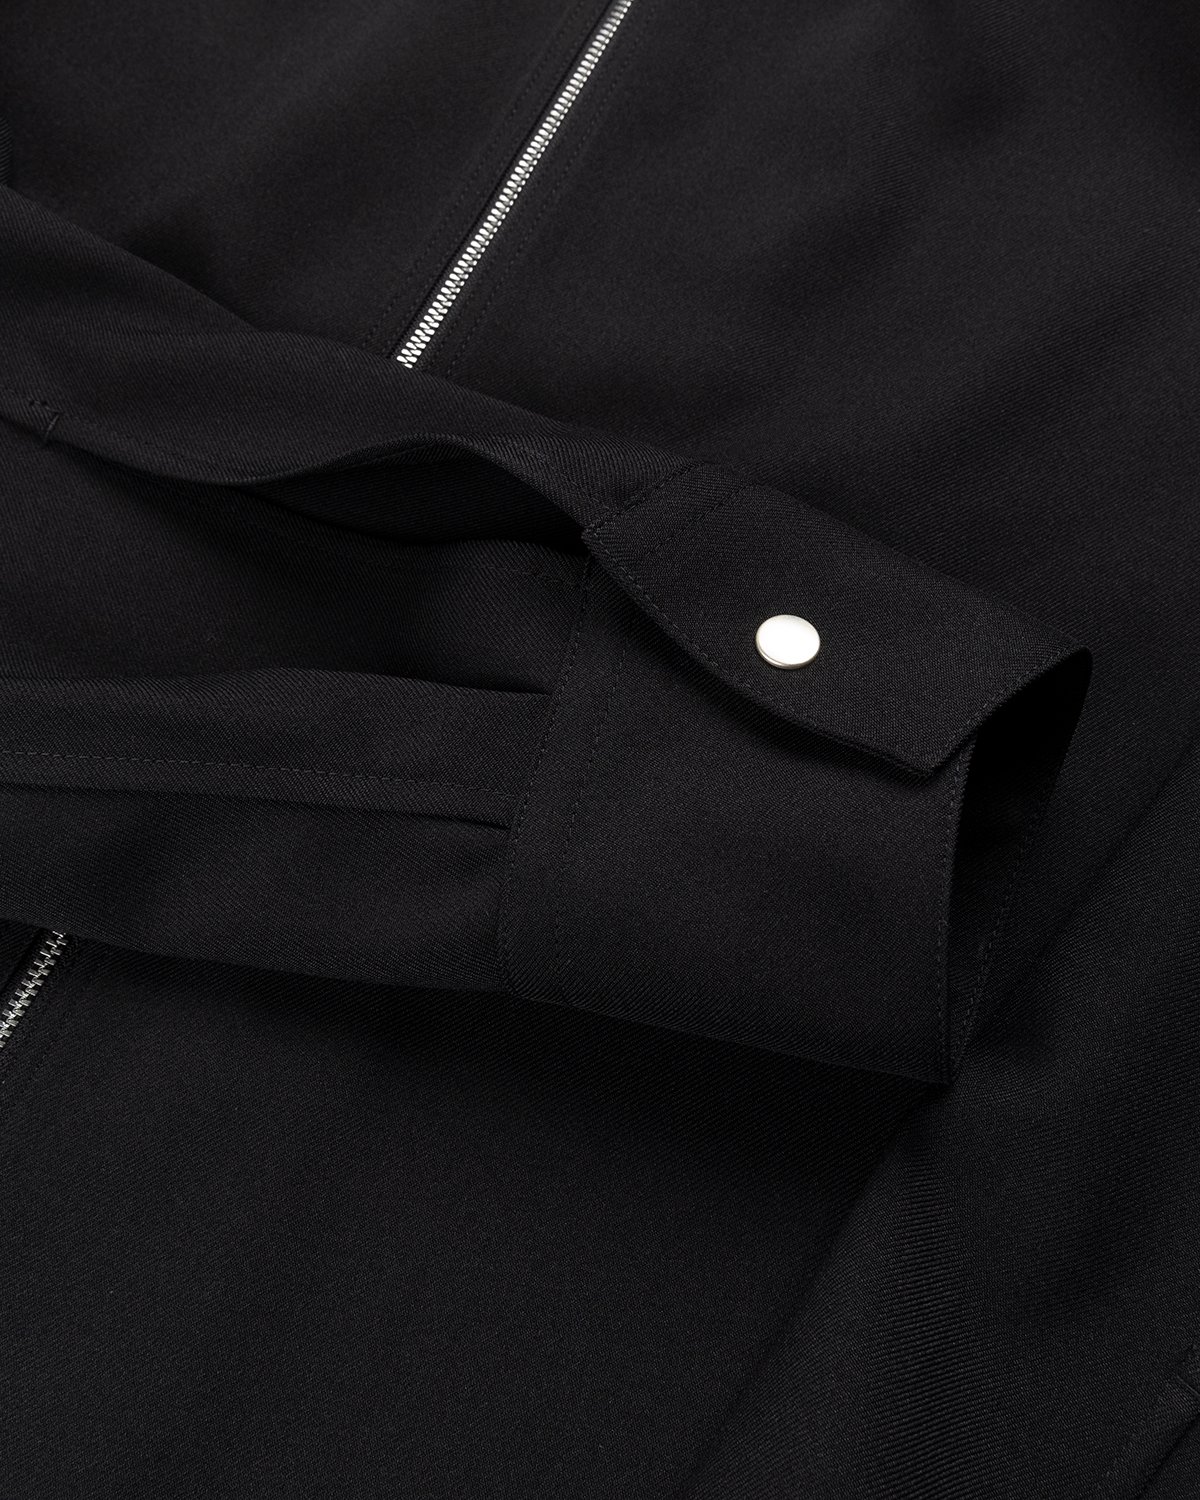 Jil Sander - Full Zip Shirt Black - Clothing - Black - Image 3